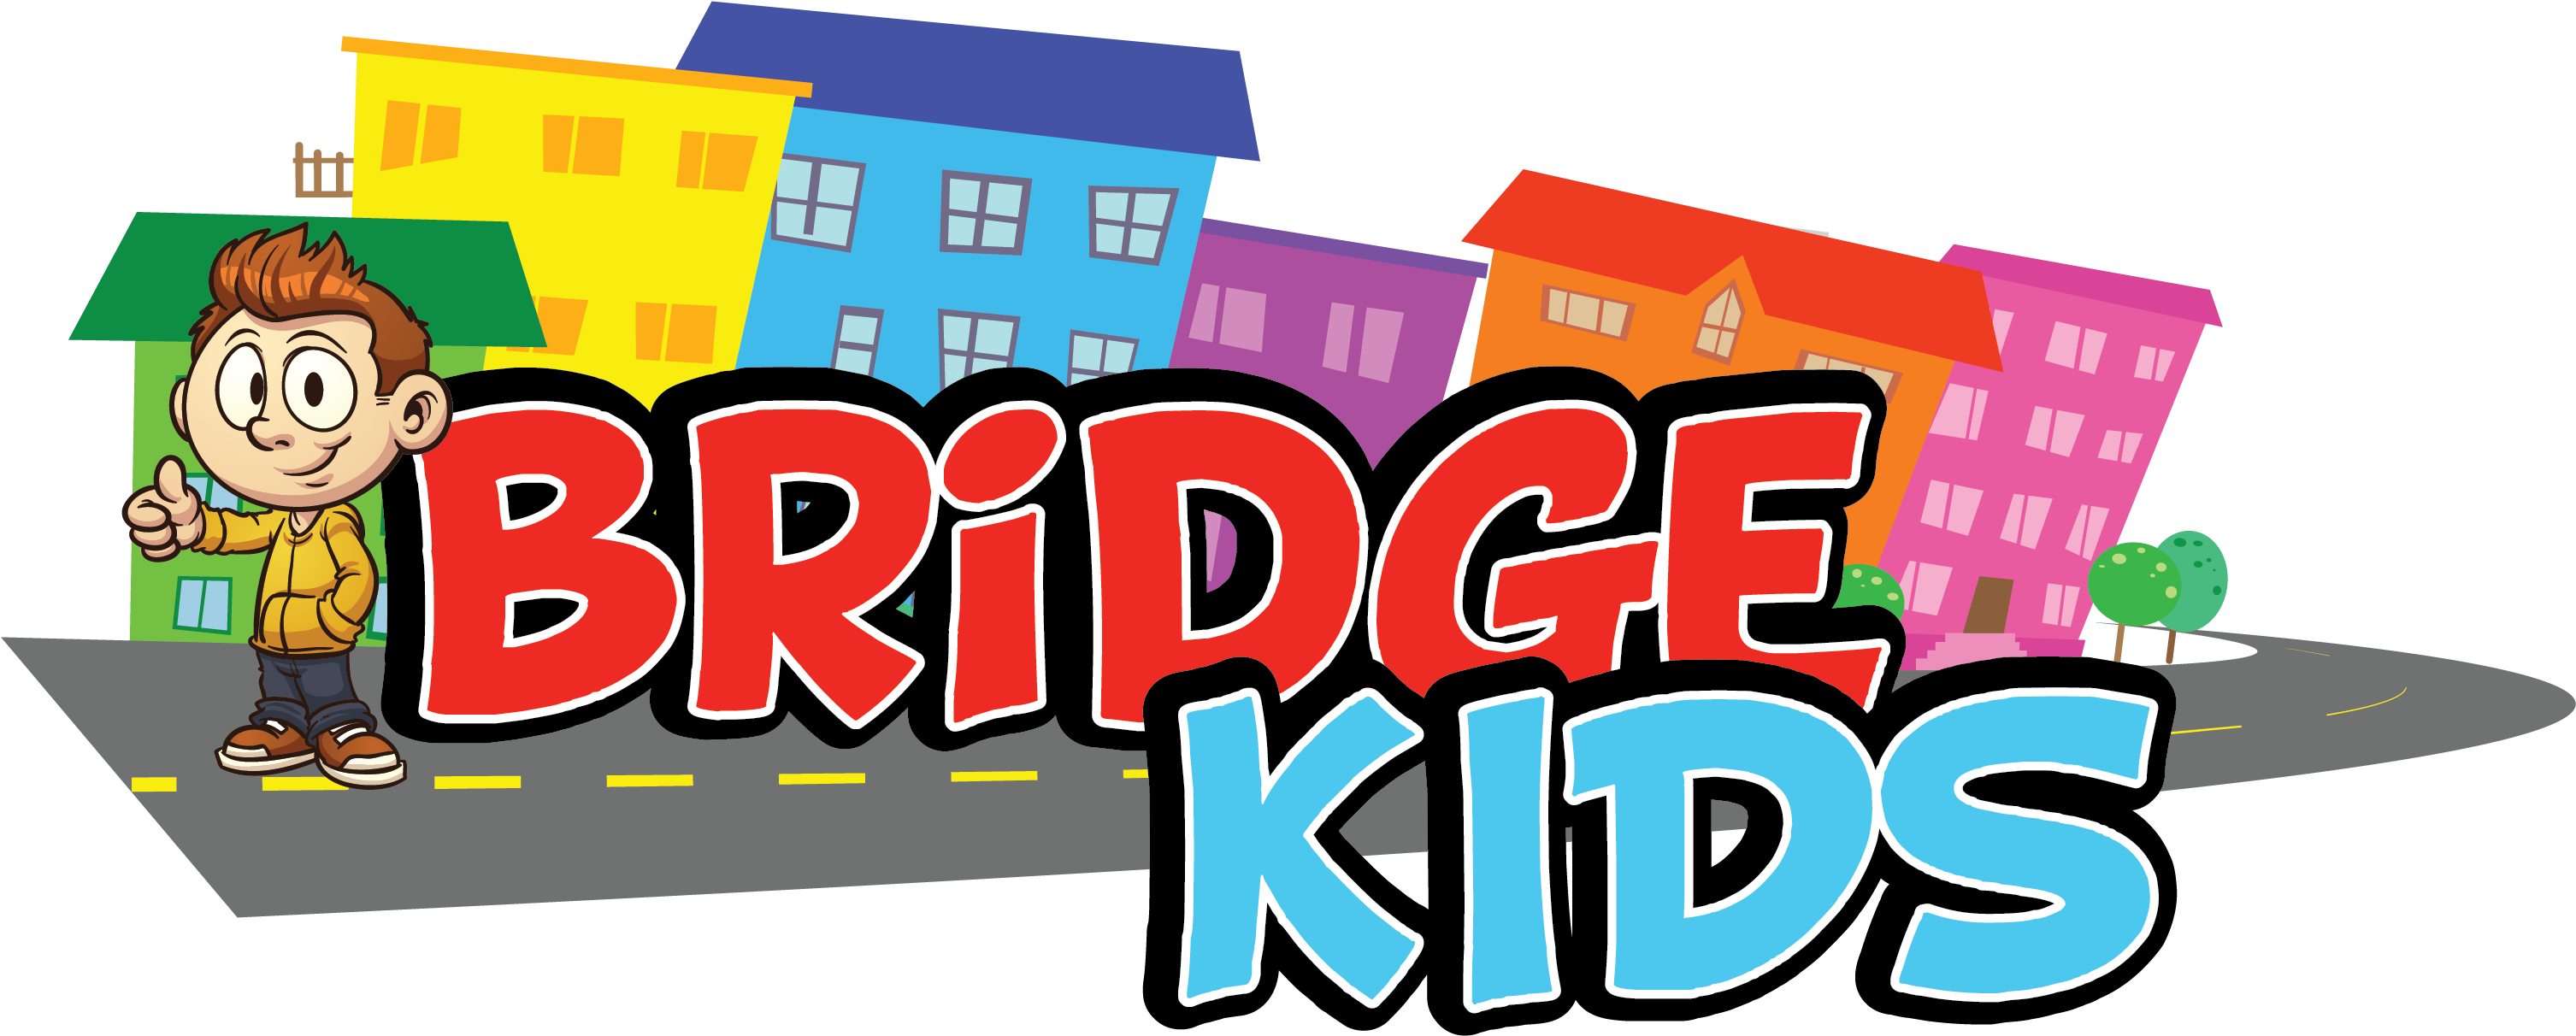 Bridge Kids Final - Graphic Design (3300x2550)